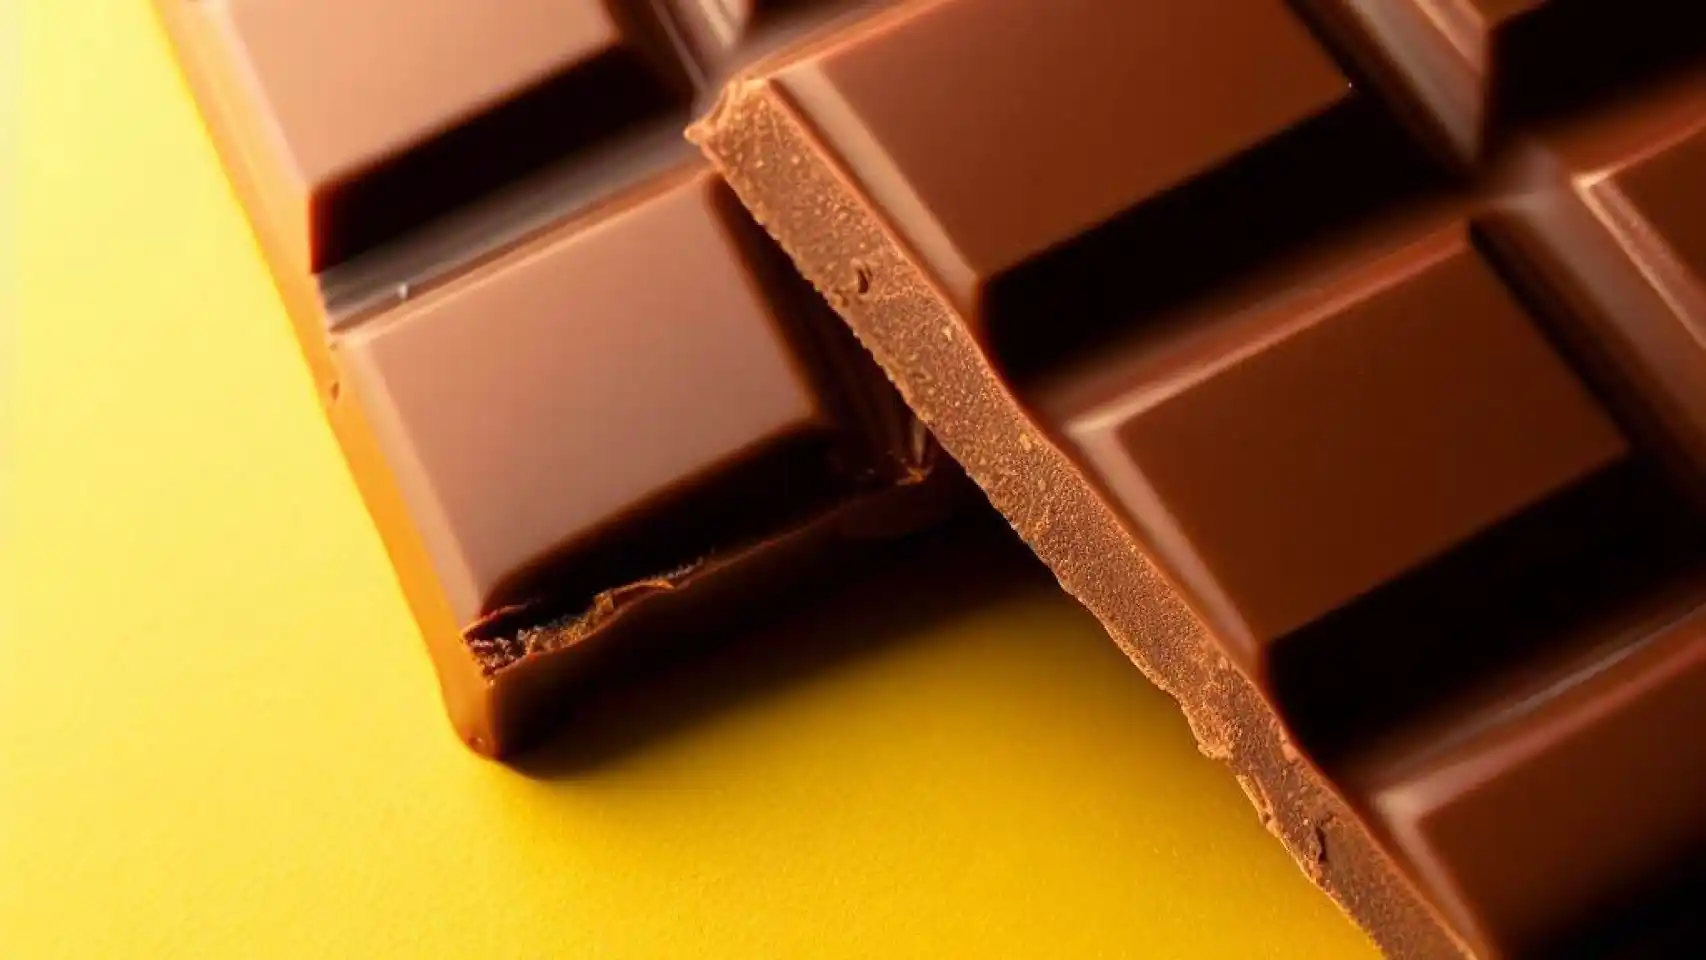 Ordenan la retirada inmediata de este famoso chocolate en España